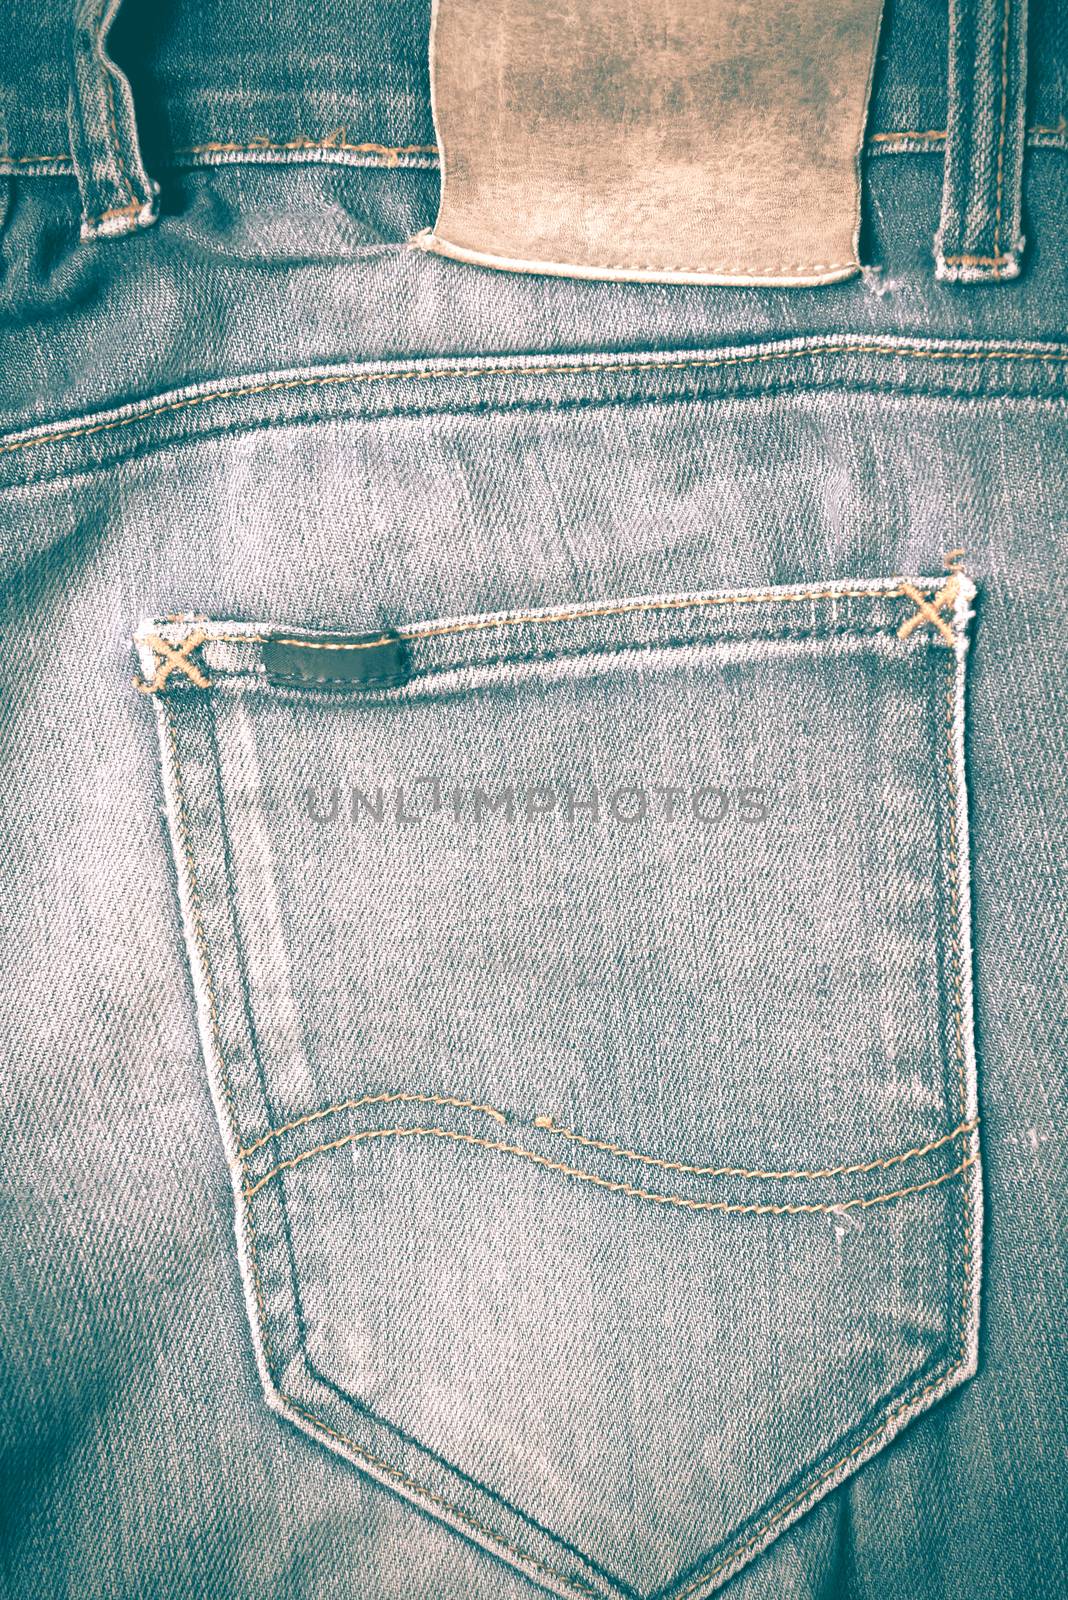 label on jean pants retro vintage style by ammza12